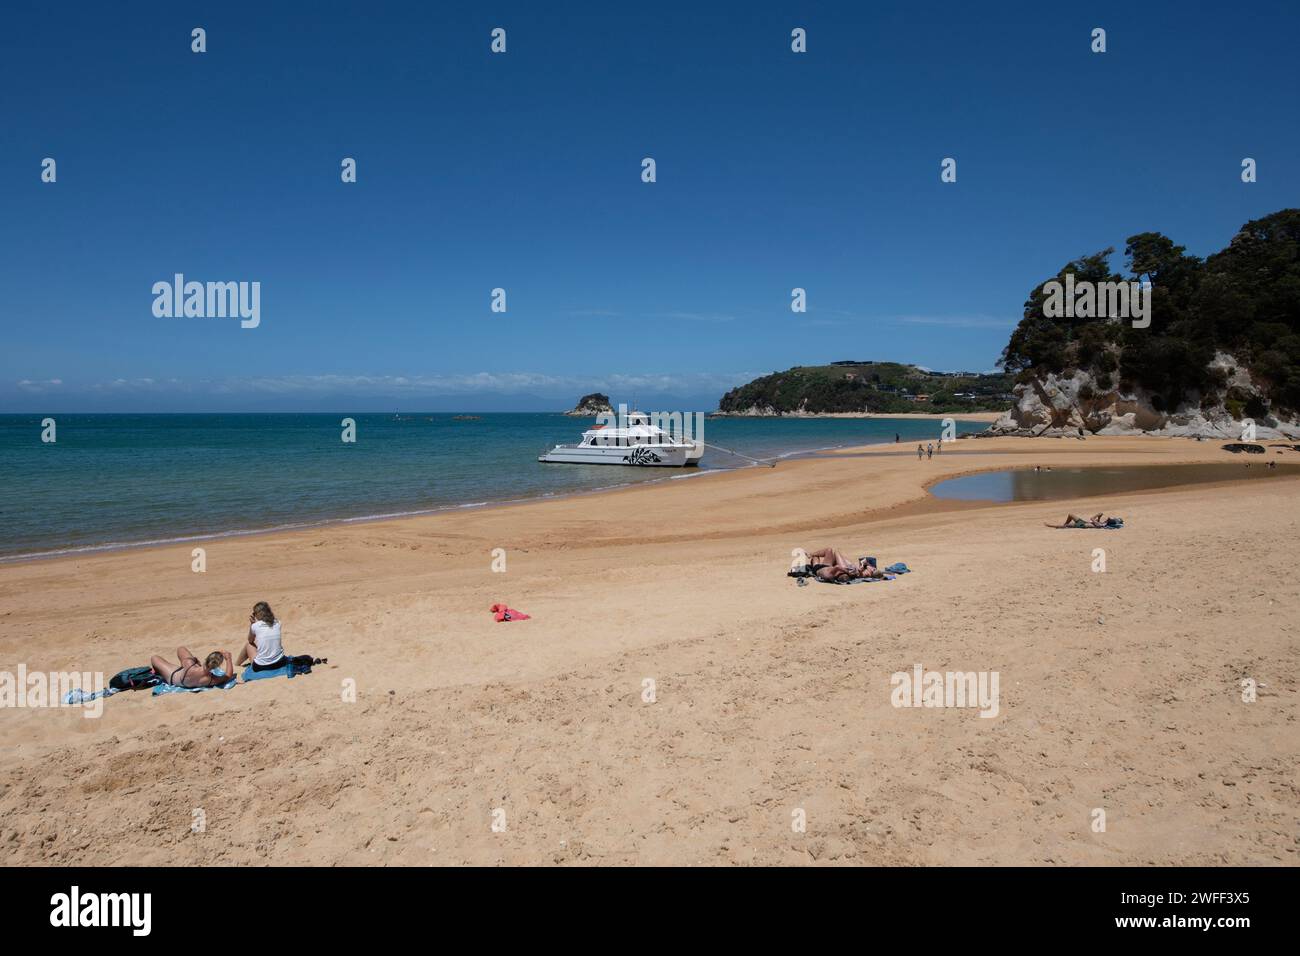 Boat and sunbathers on beach, Kaiteriteri Beach, Tasman, South Island, New Zealand Stock Photo